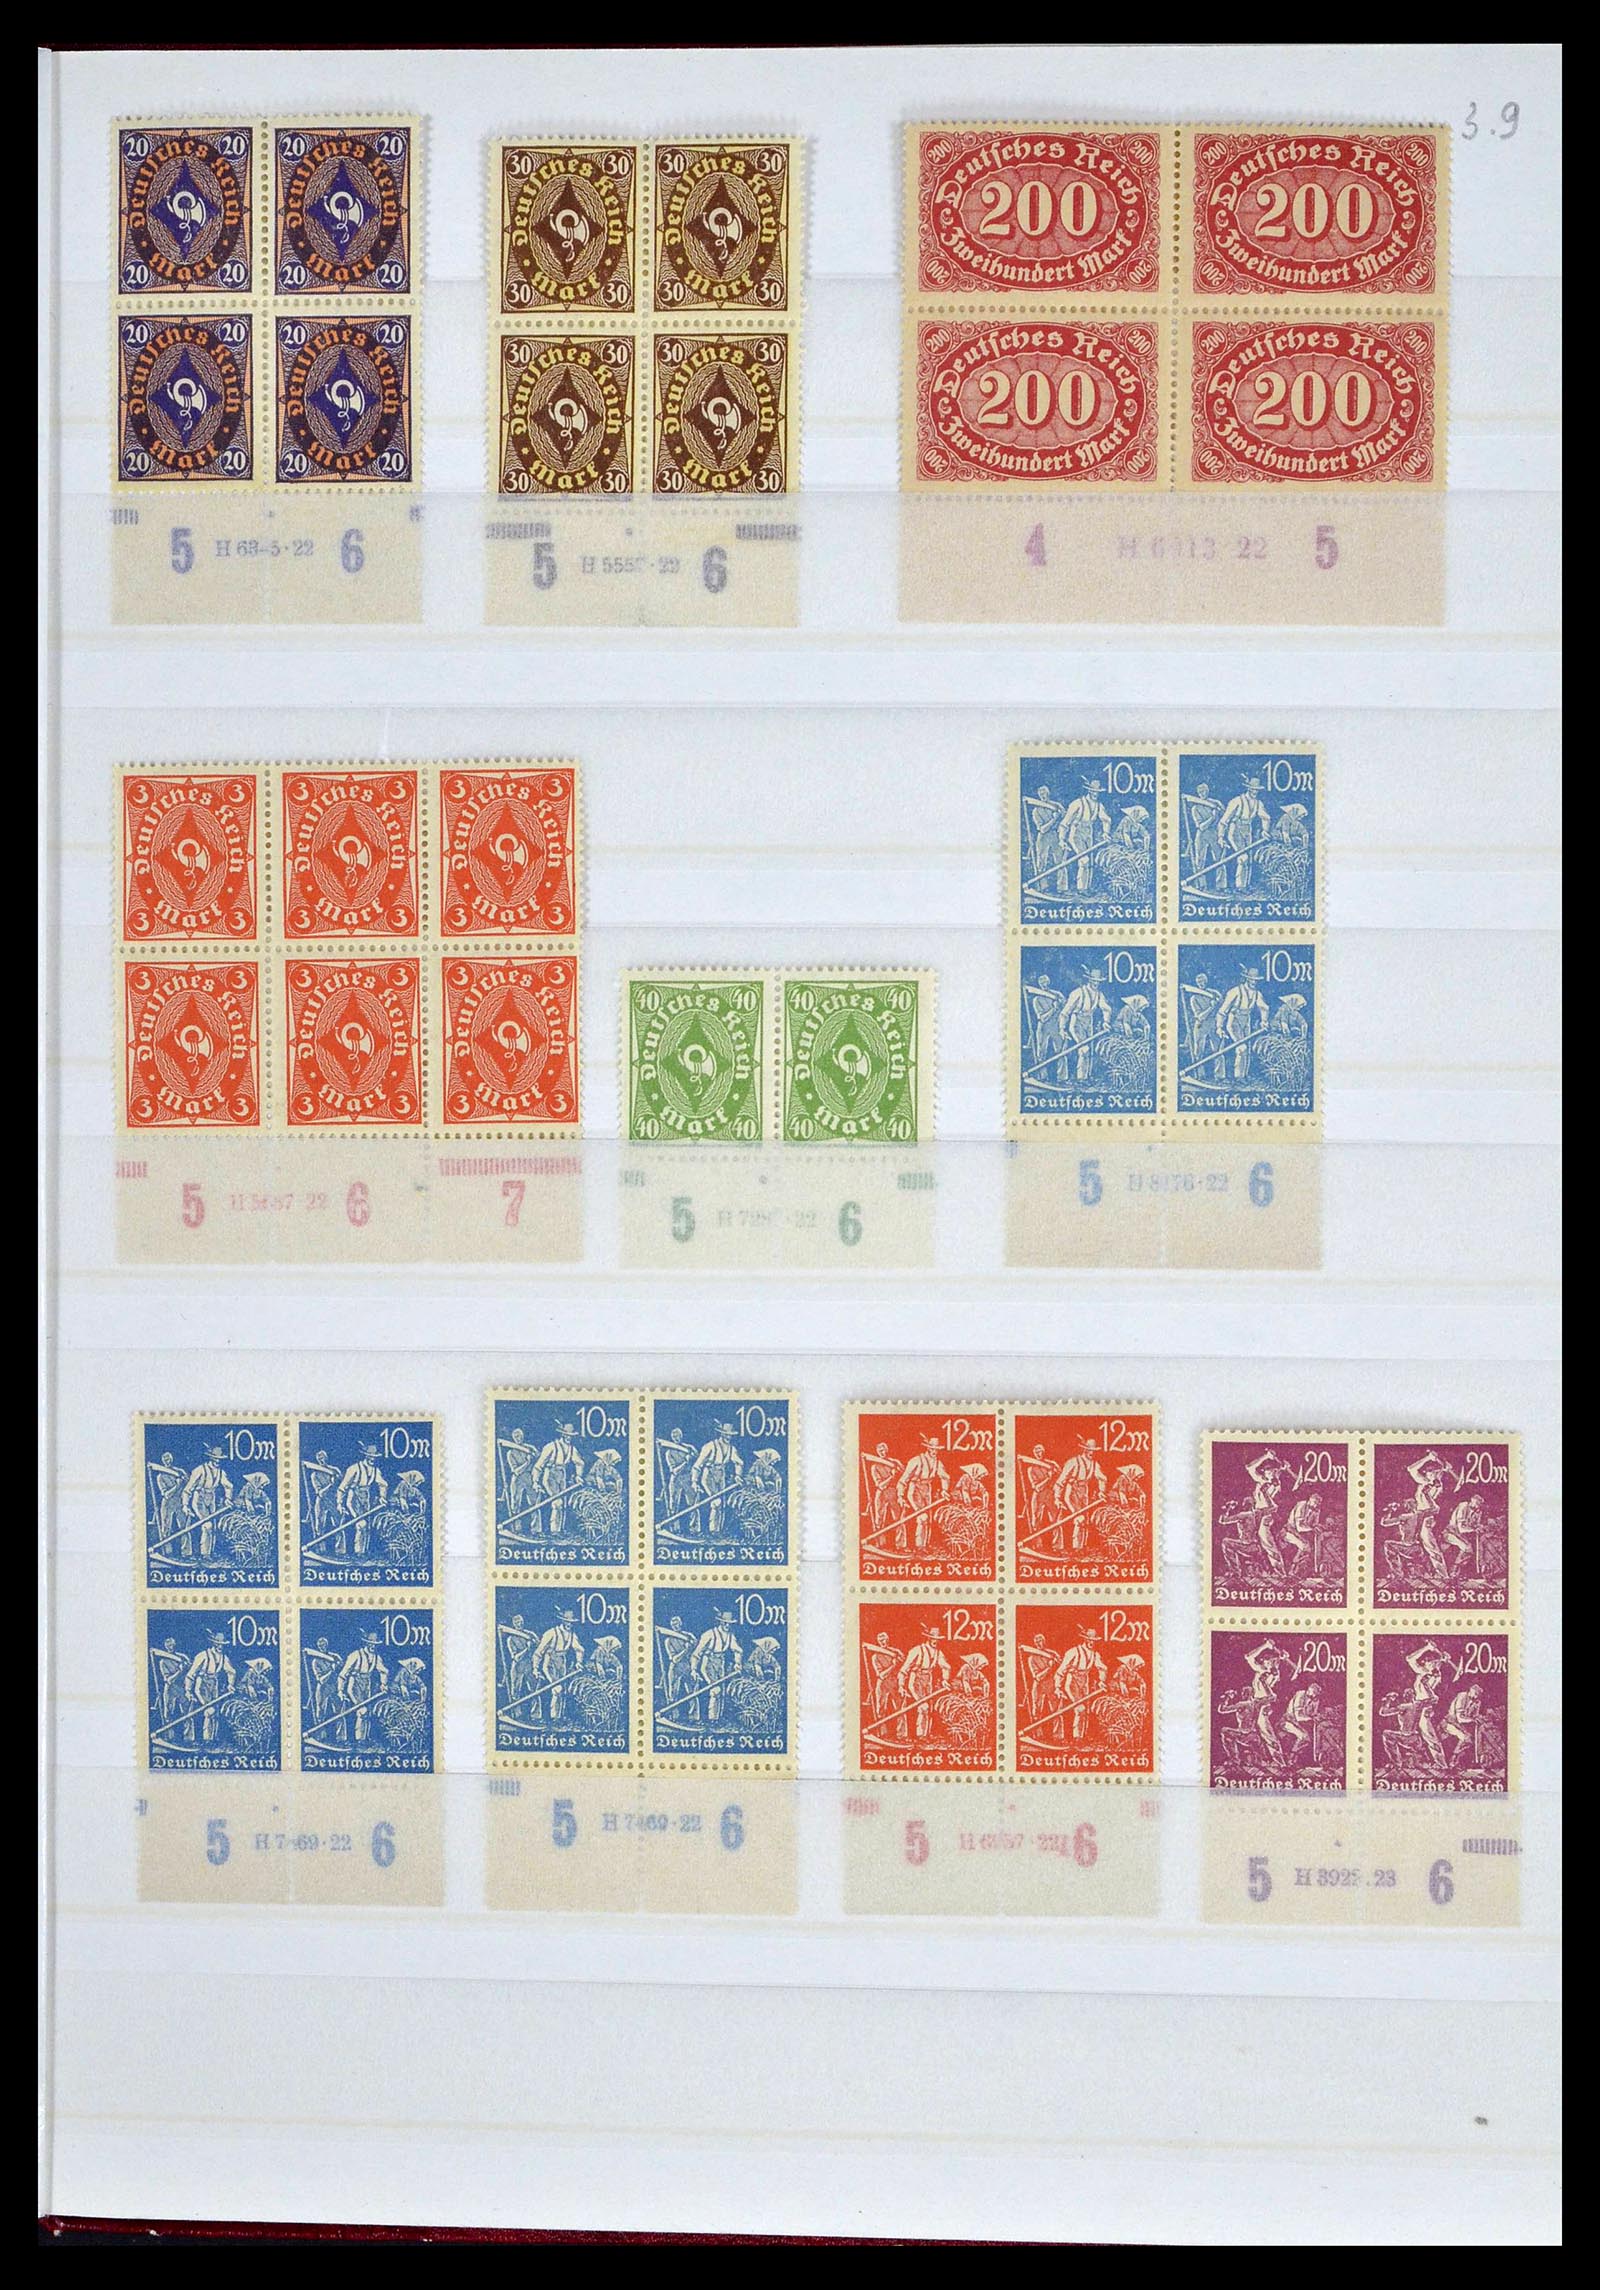 39254 0081 - Stamp collection 39254 German Reich MNH top margins.